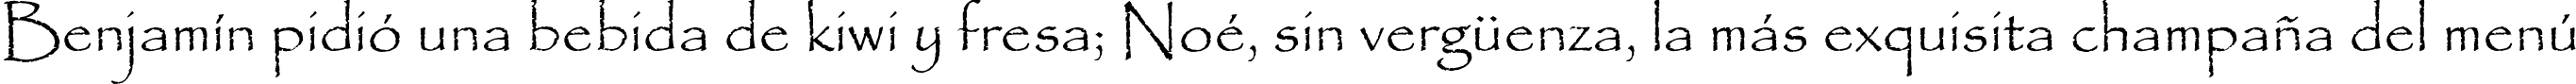 Пример написания шрифтом Papyrus текста на испанском